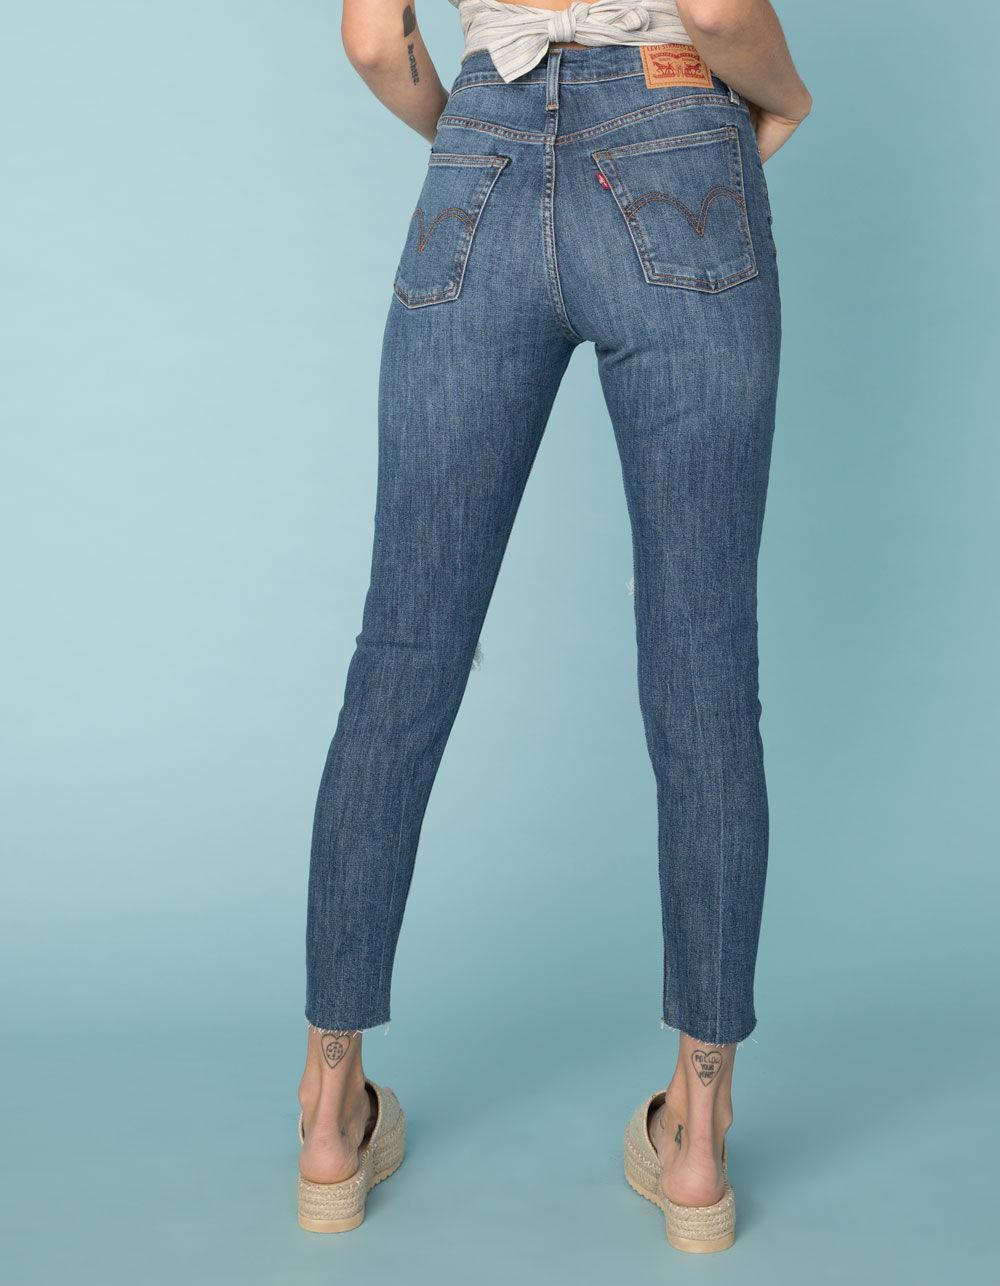 Levi's Denim Wedgie High Rise Dark Wash Womens Skinny Ripped Jeans in